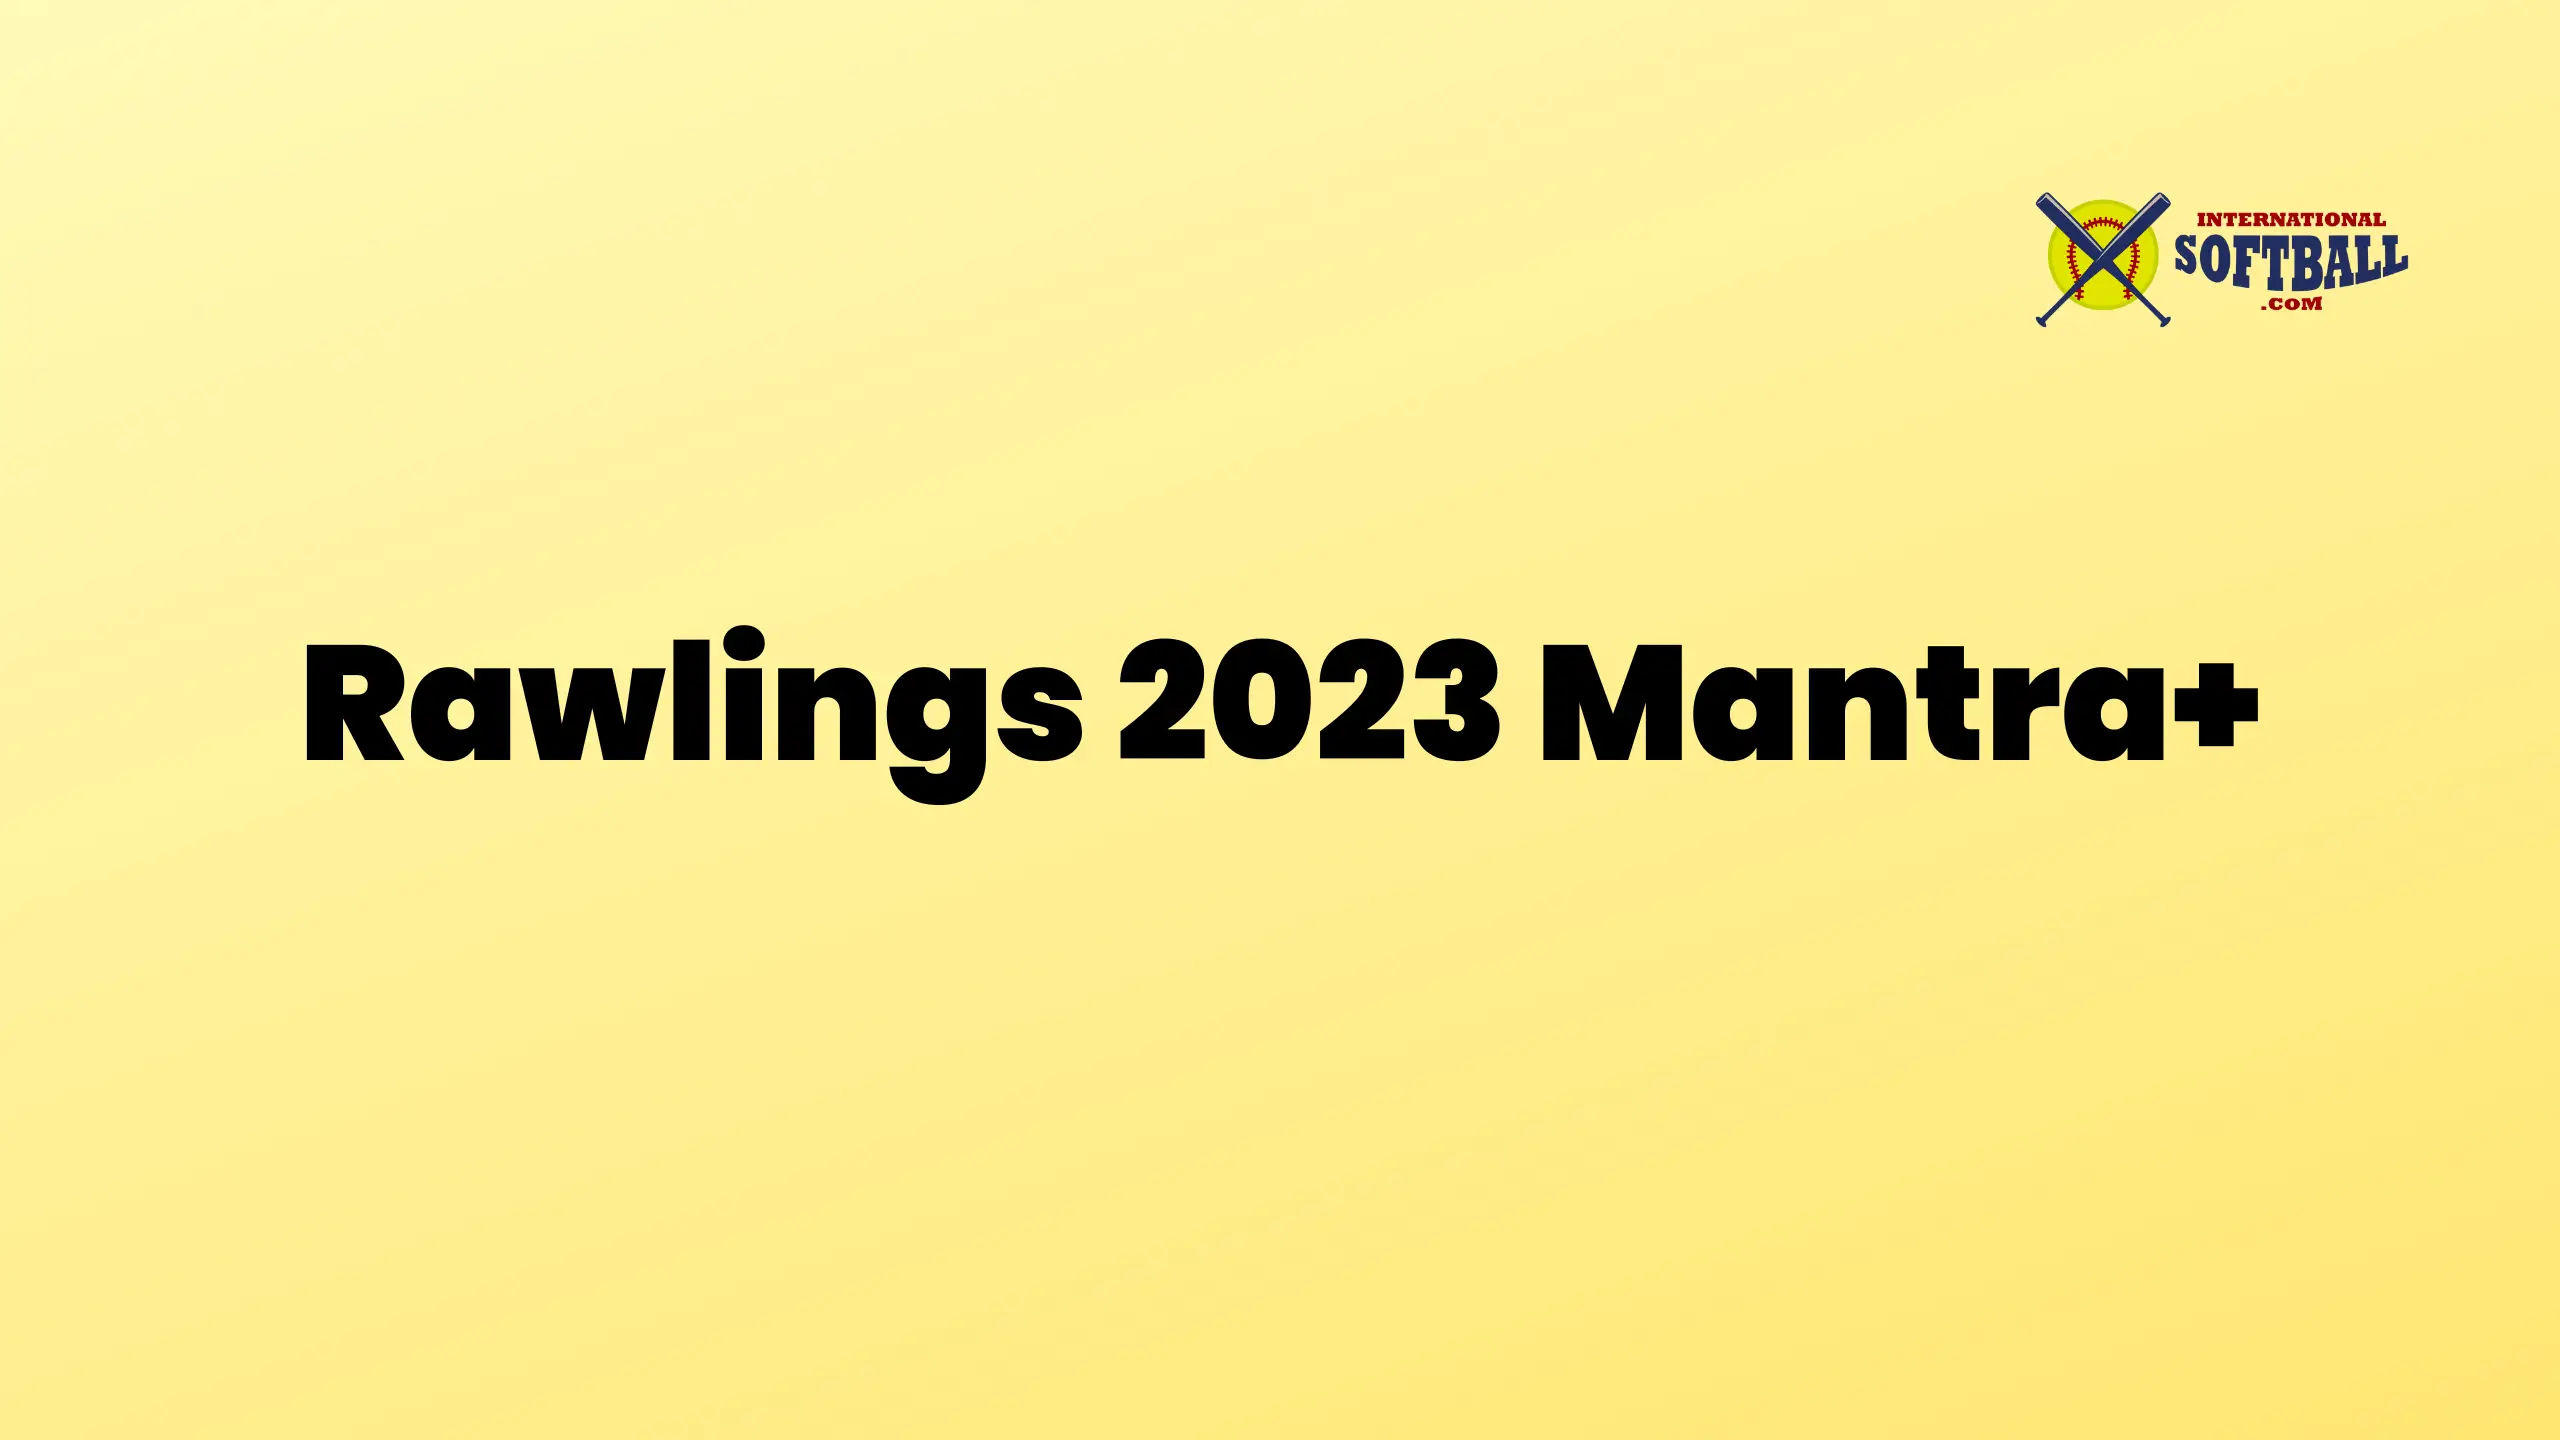 Rawlings 2023 Mantra+